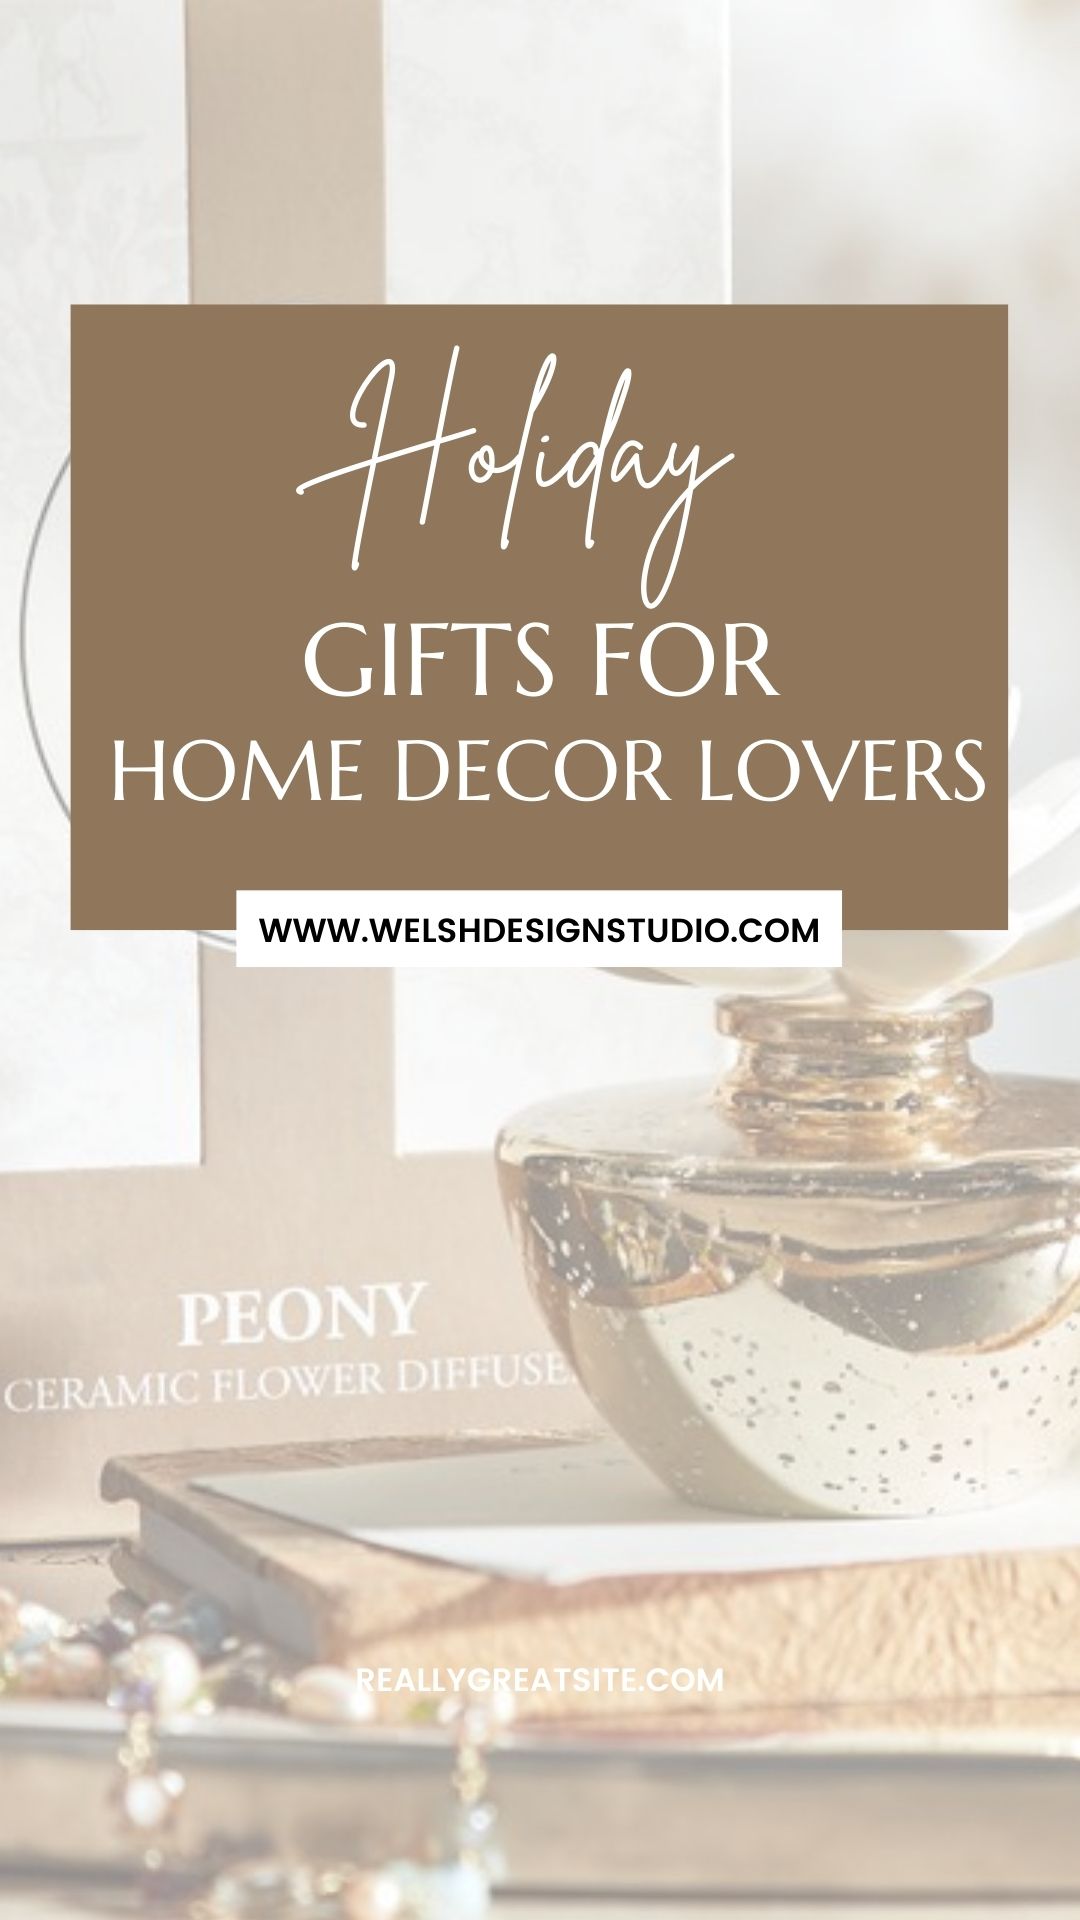 LDTK Home Decor & Gifts Co. | Valatie NY